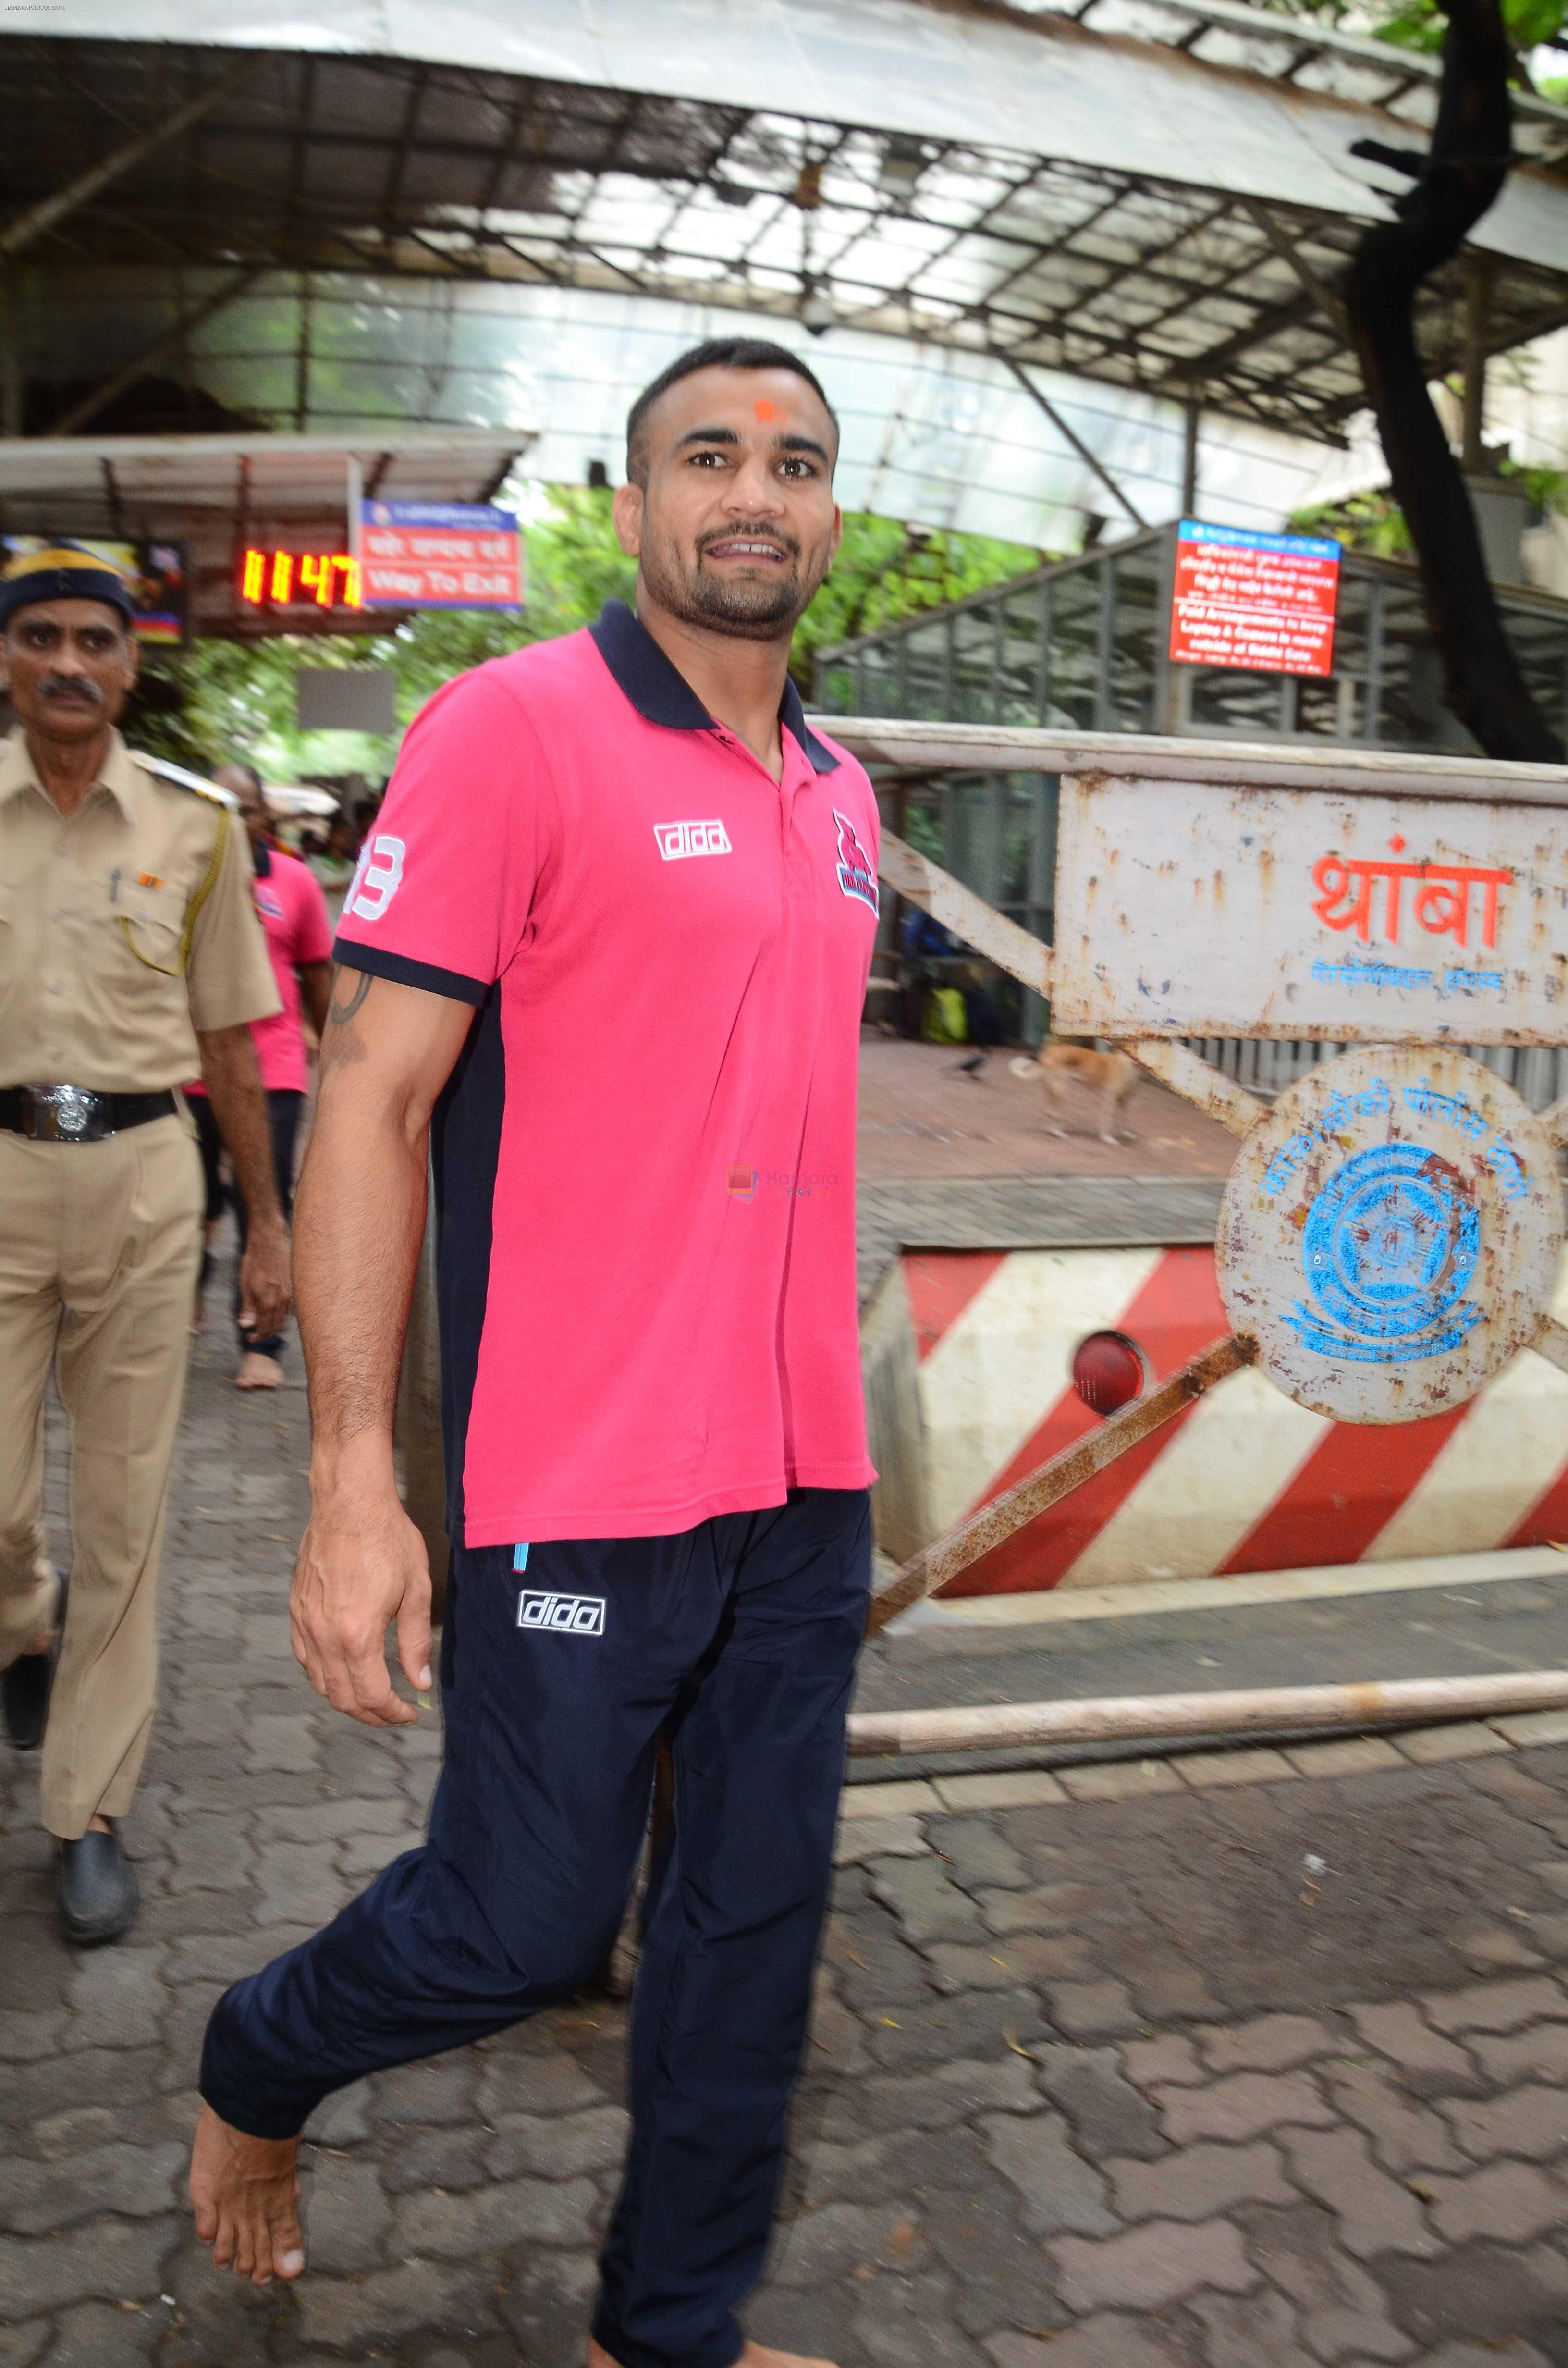 Puneri Paltan visits Siddhivinayak Temple, Mumbai on July 20, 2016